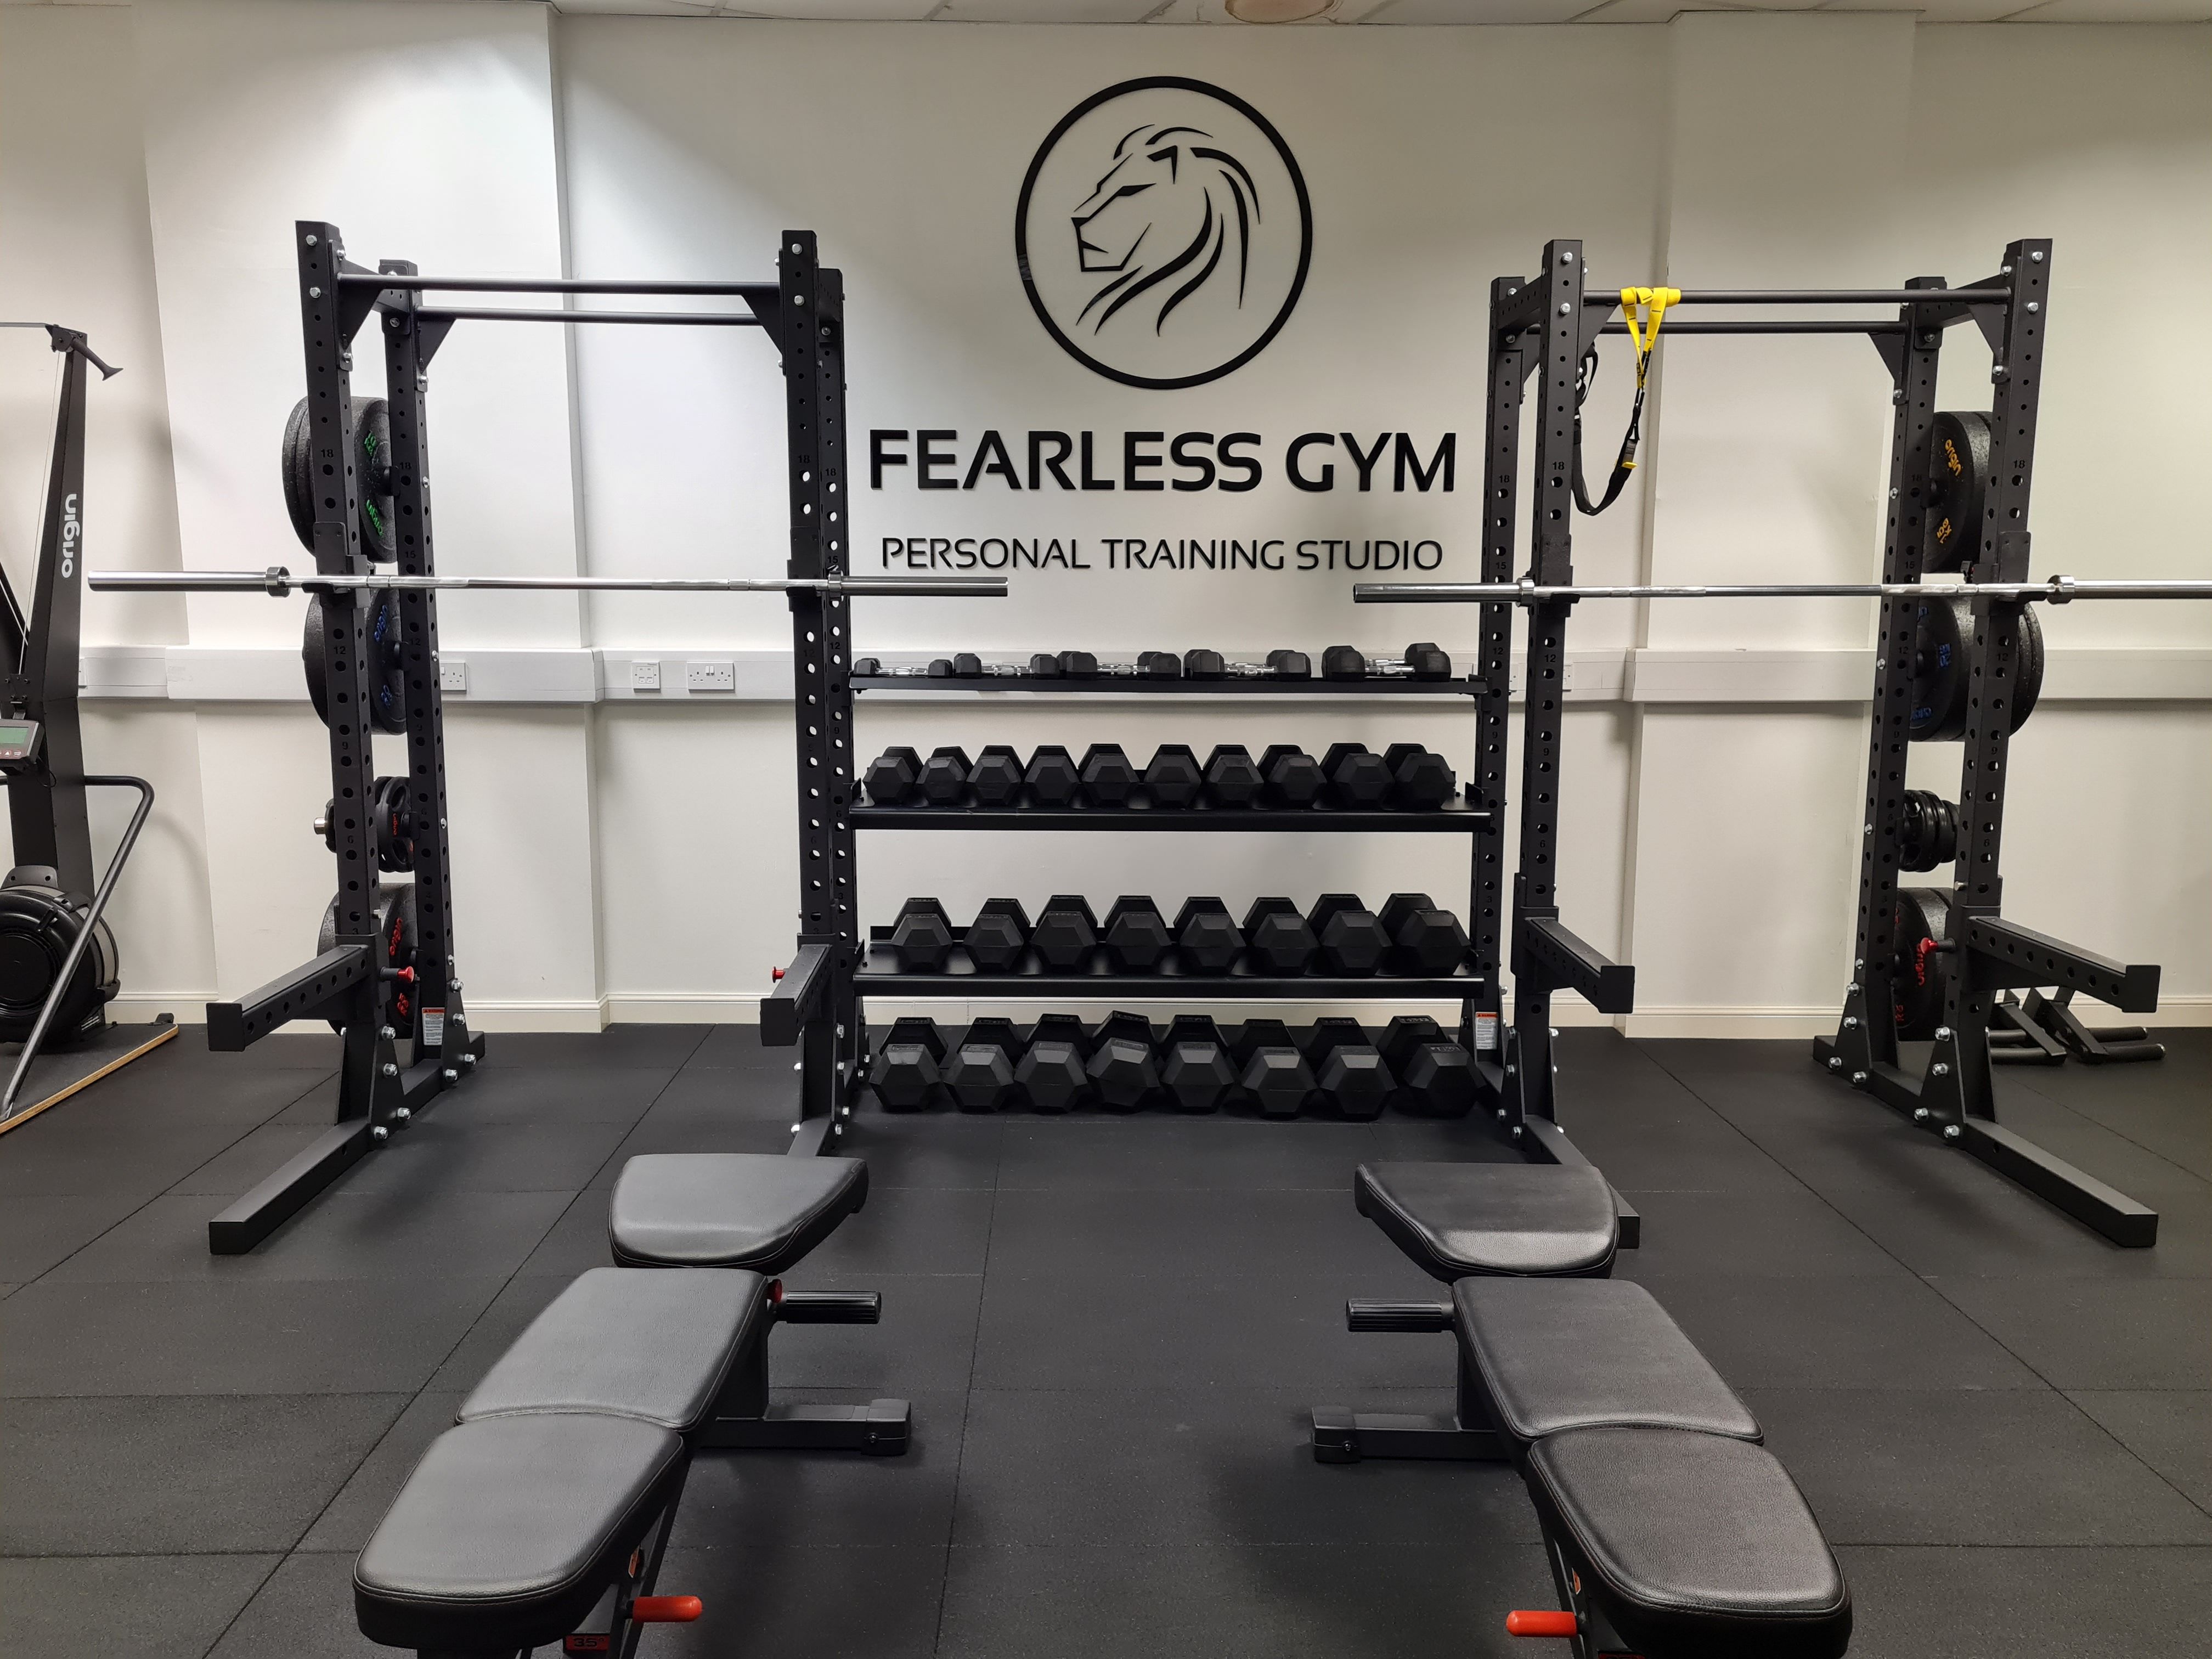 Fearless Gym PT Studio Case Study